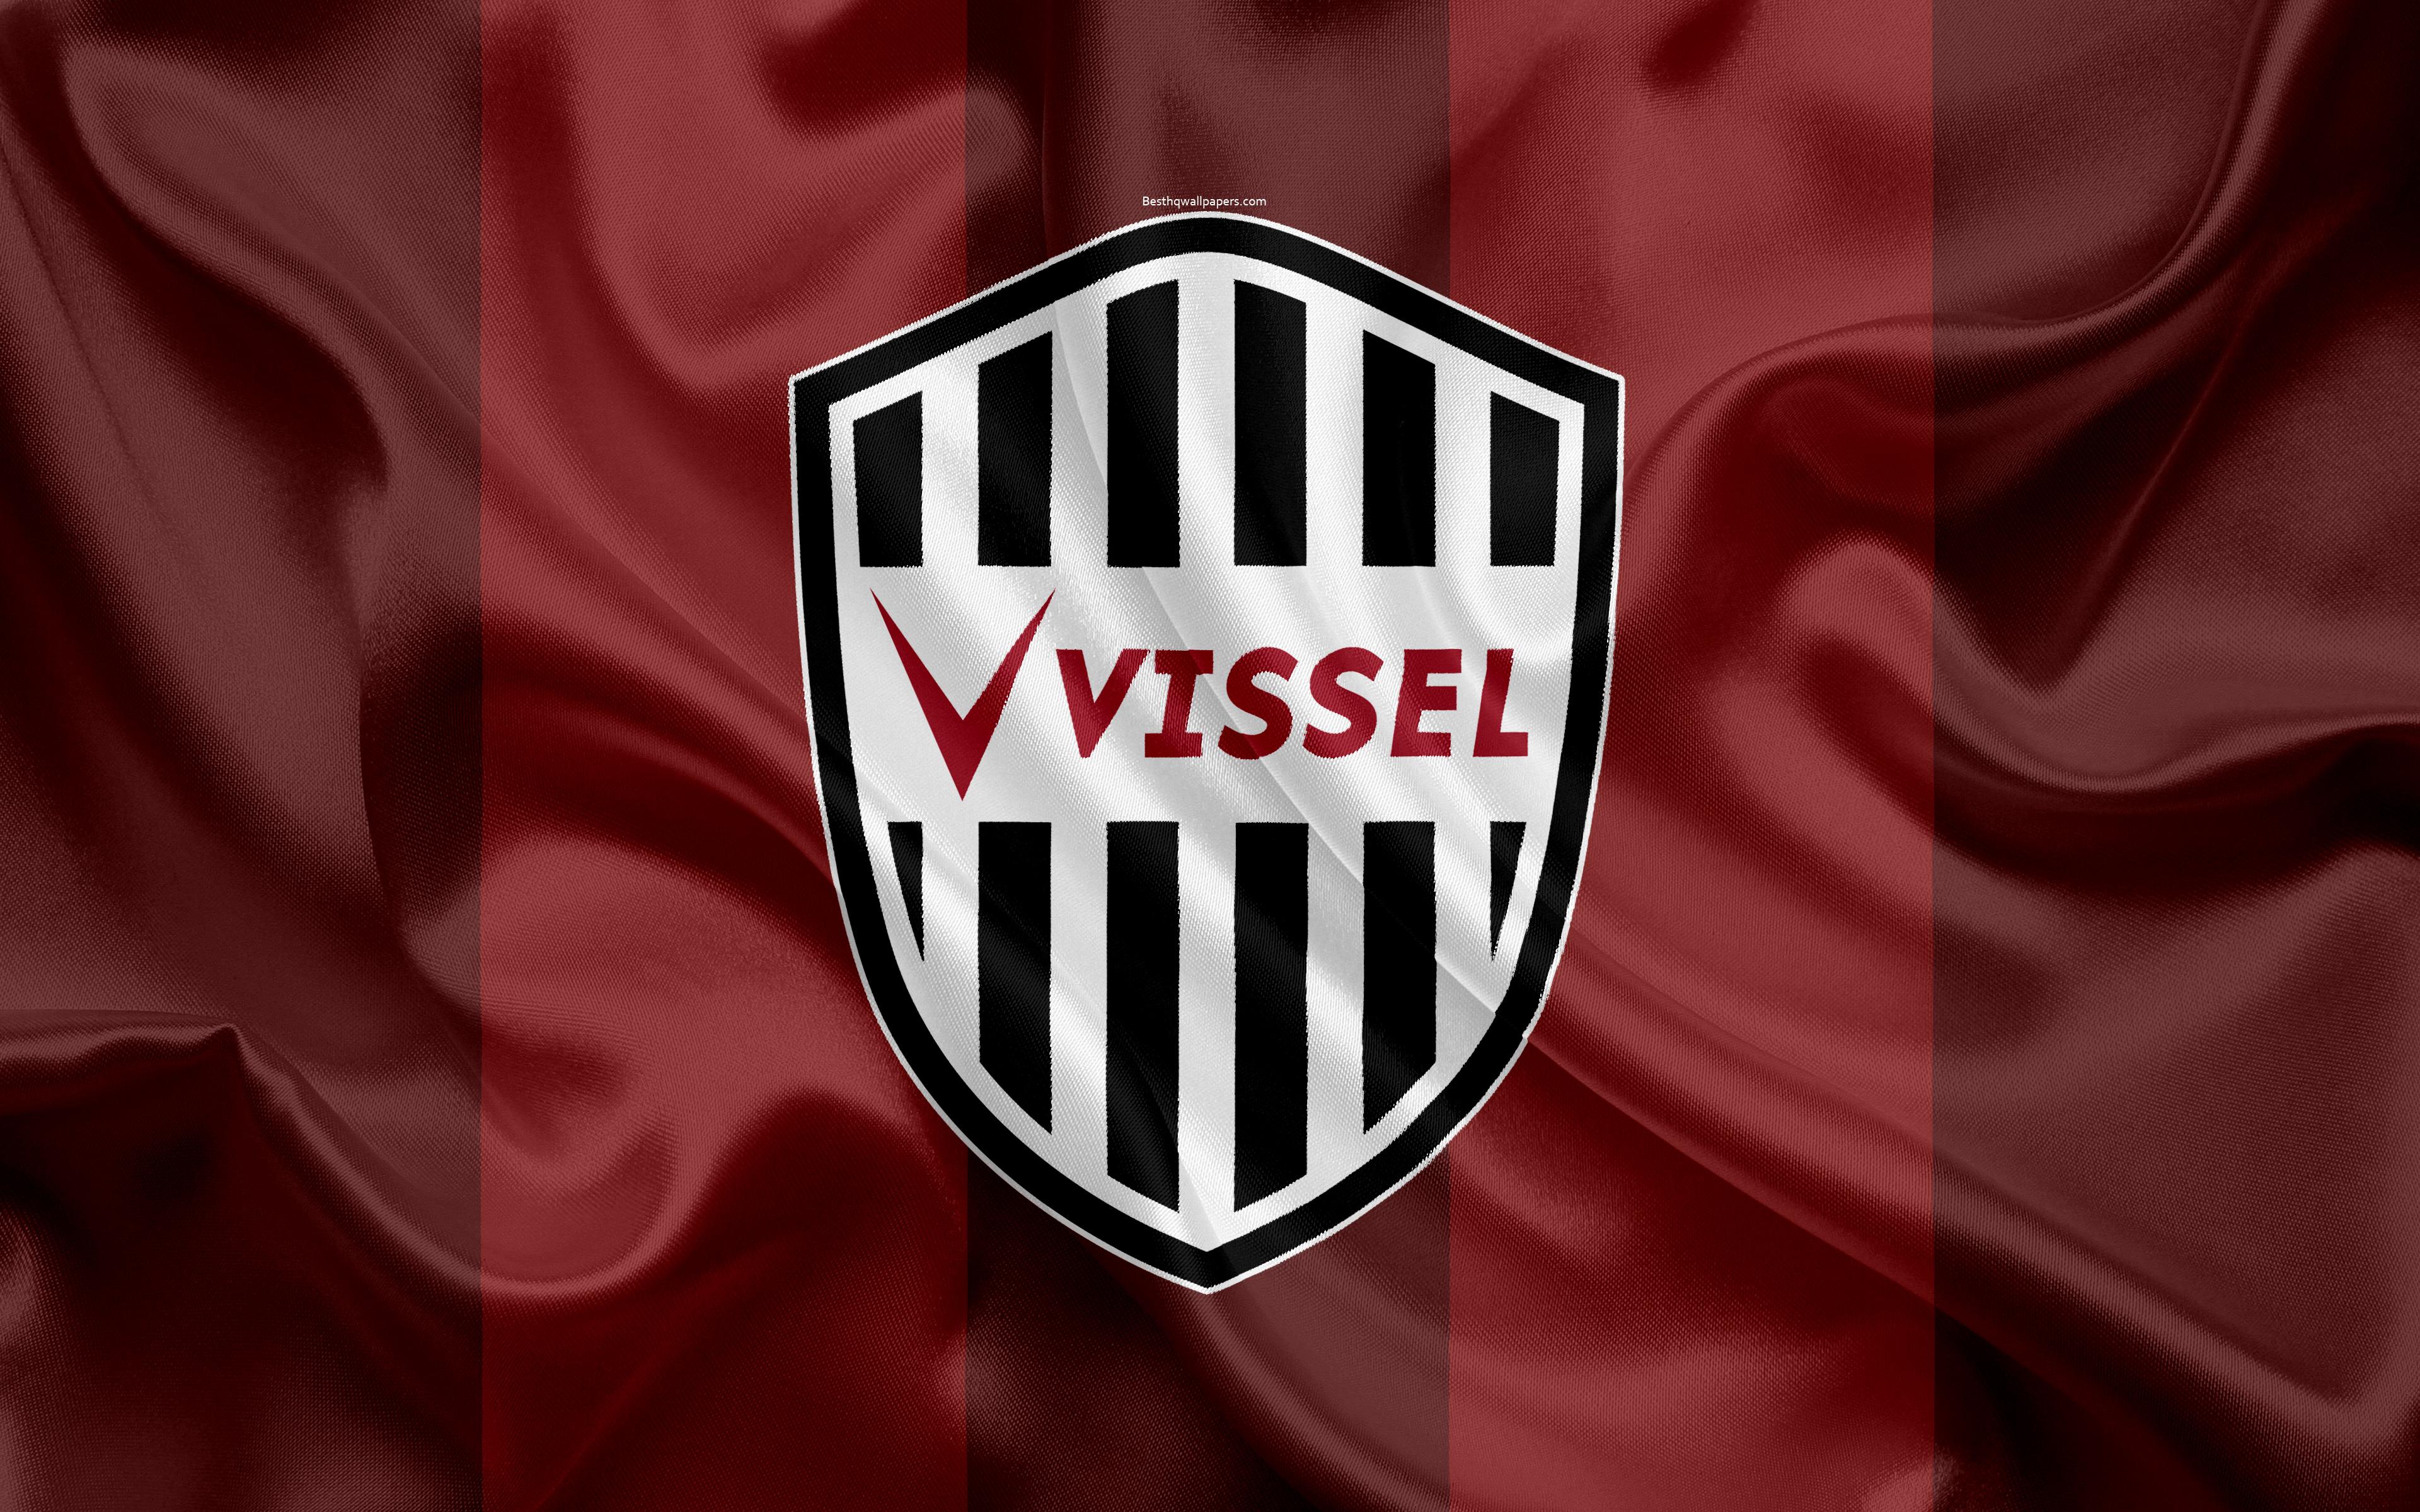 Download wallpaper Vissel Kobe, 4k, Japanese football club, logo